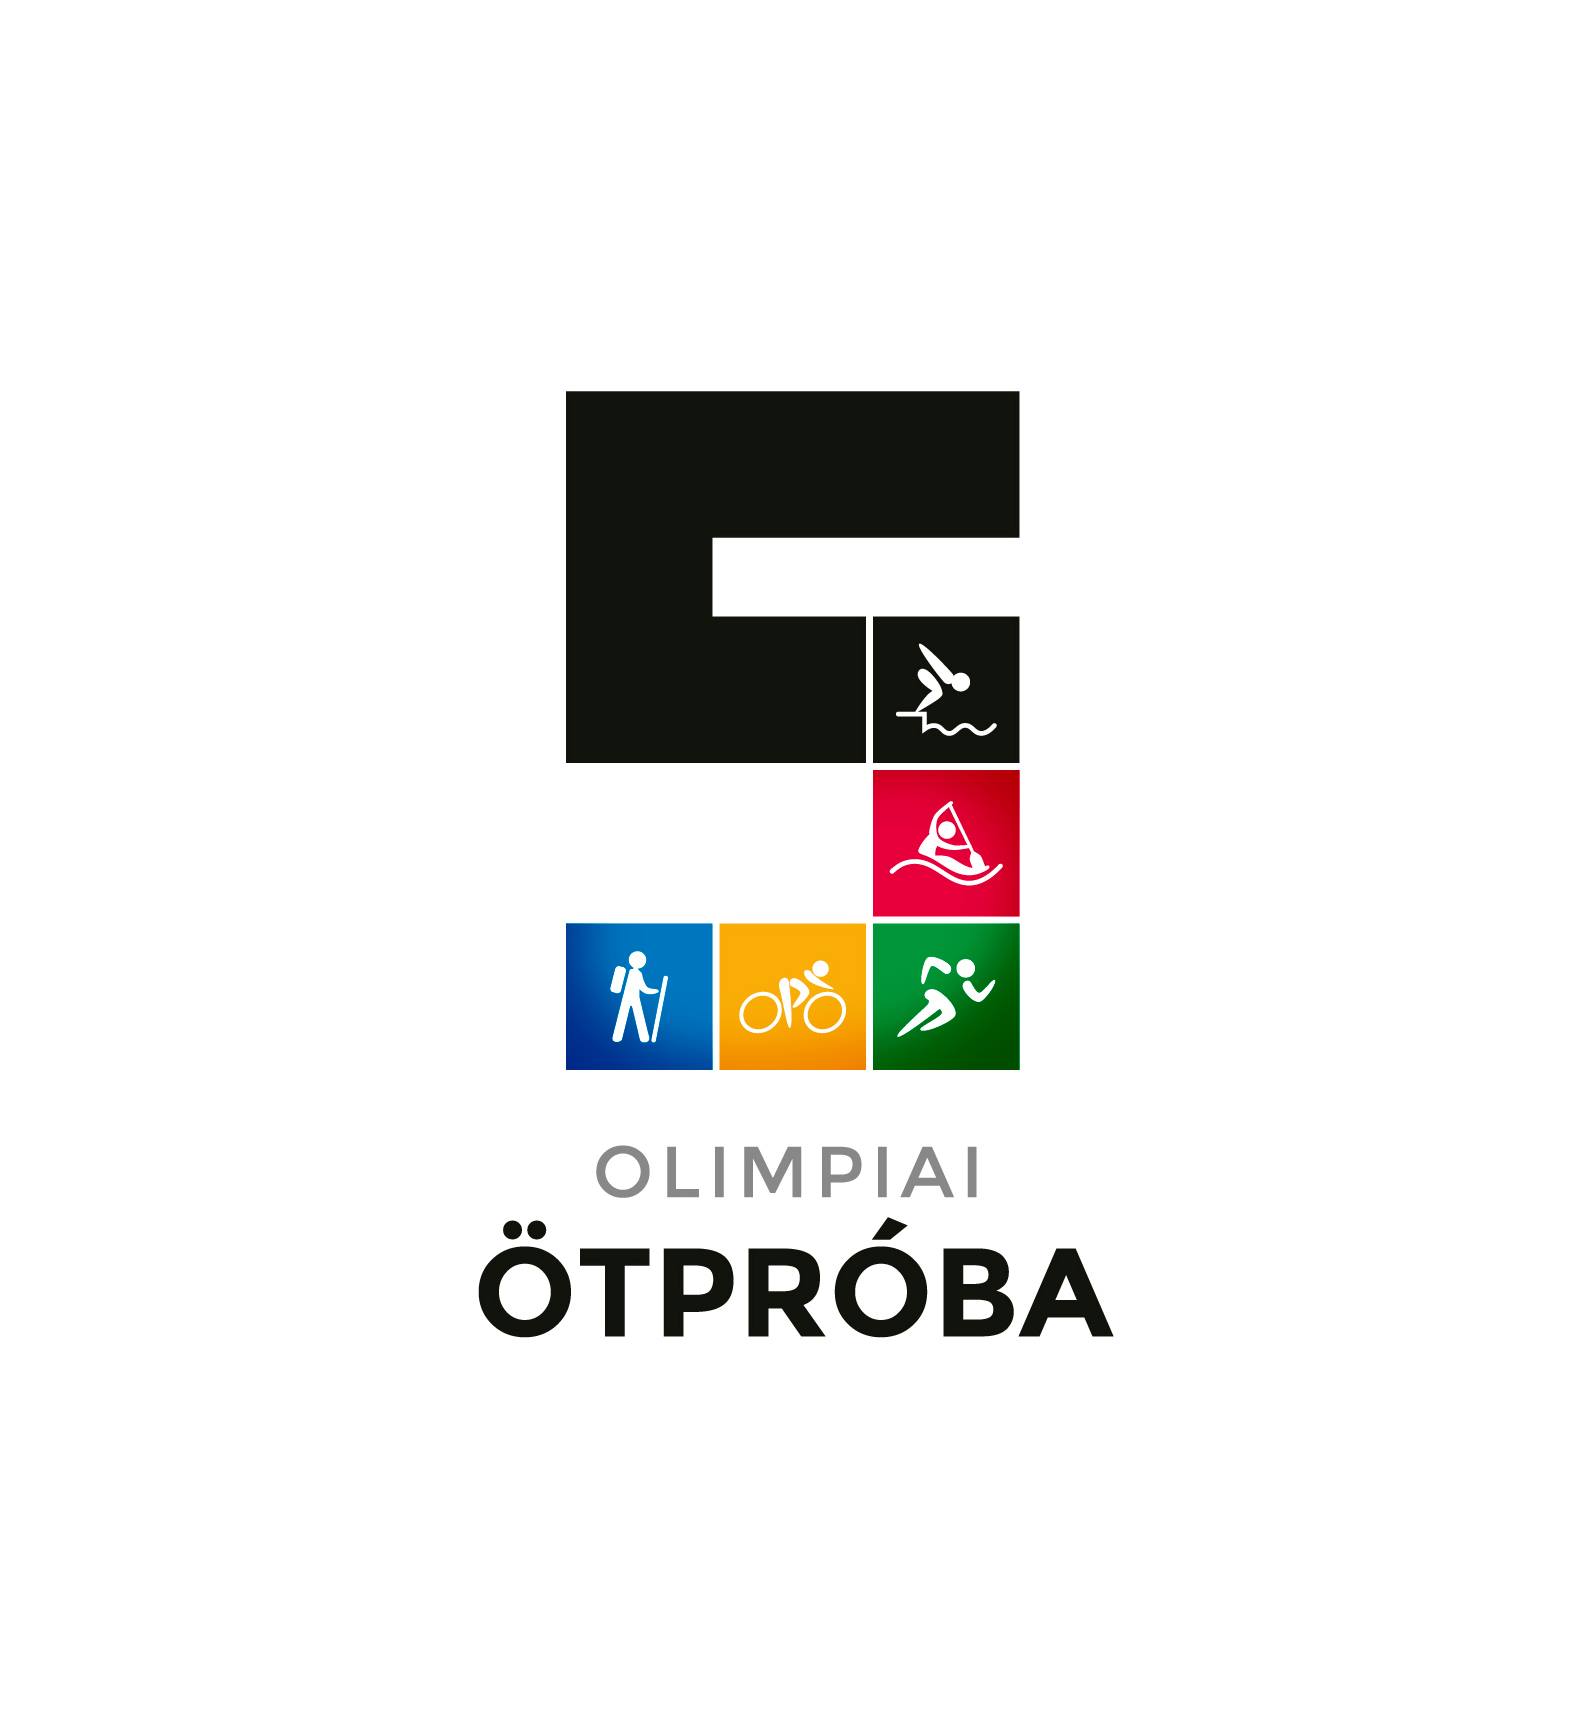 Olimpiai Ötpróba logó